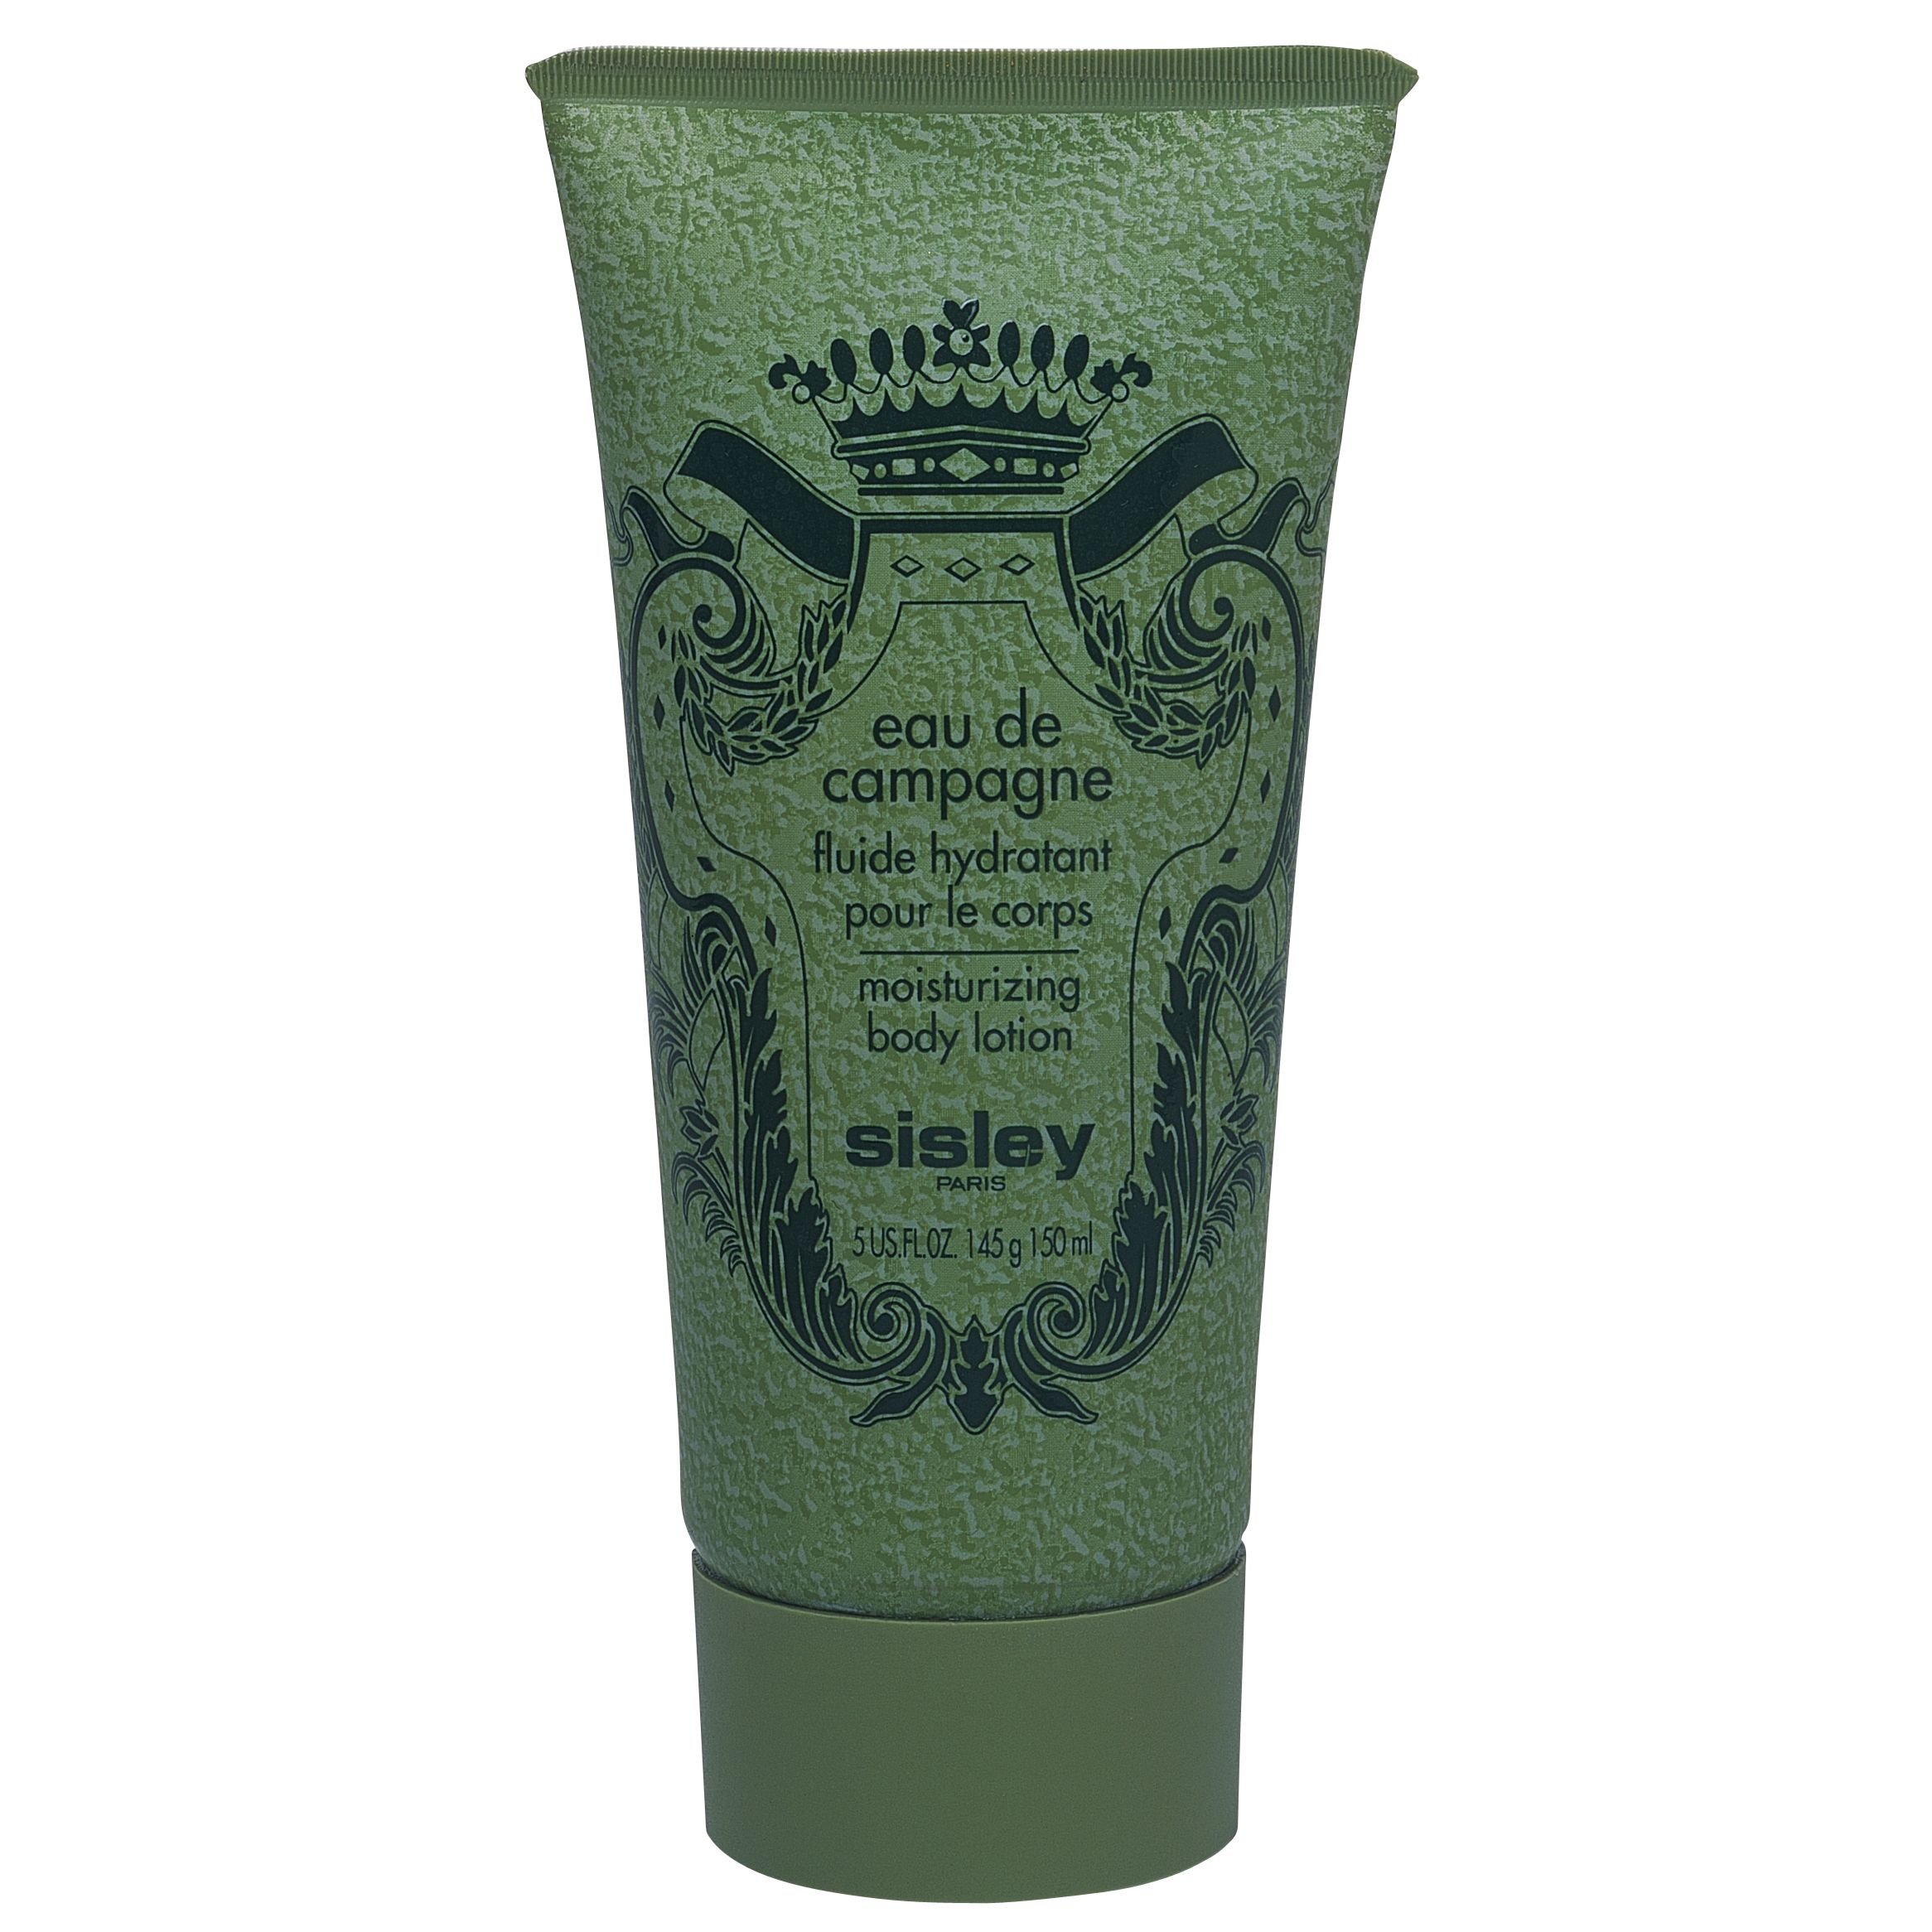 Sisley-Paris Eau de Campagne Moisturising Body Cream, 150ml